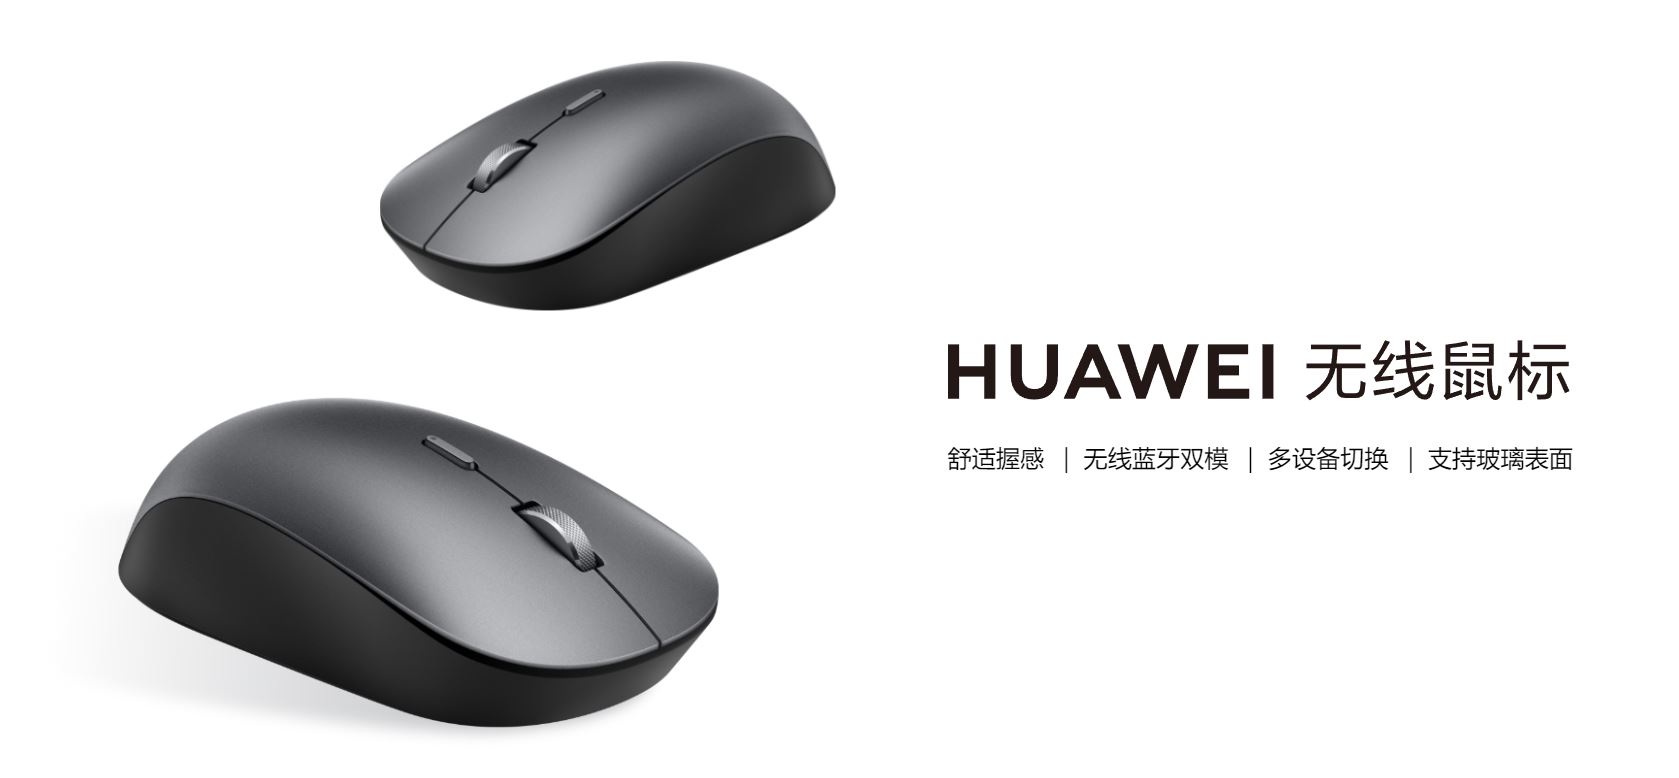 huawei wireless mouse img1